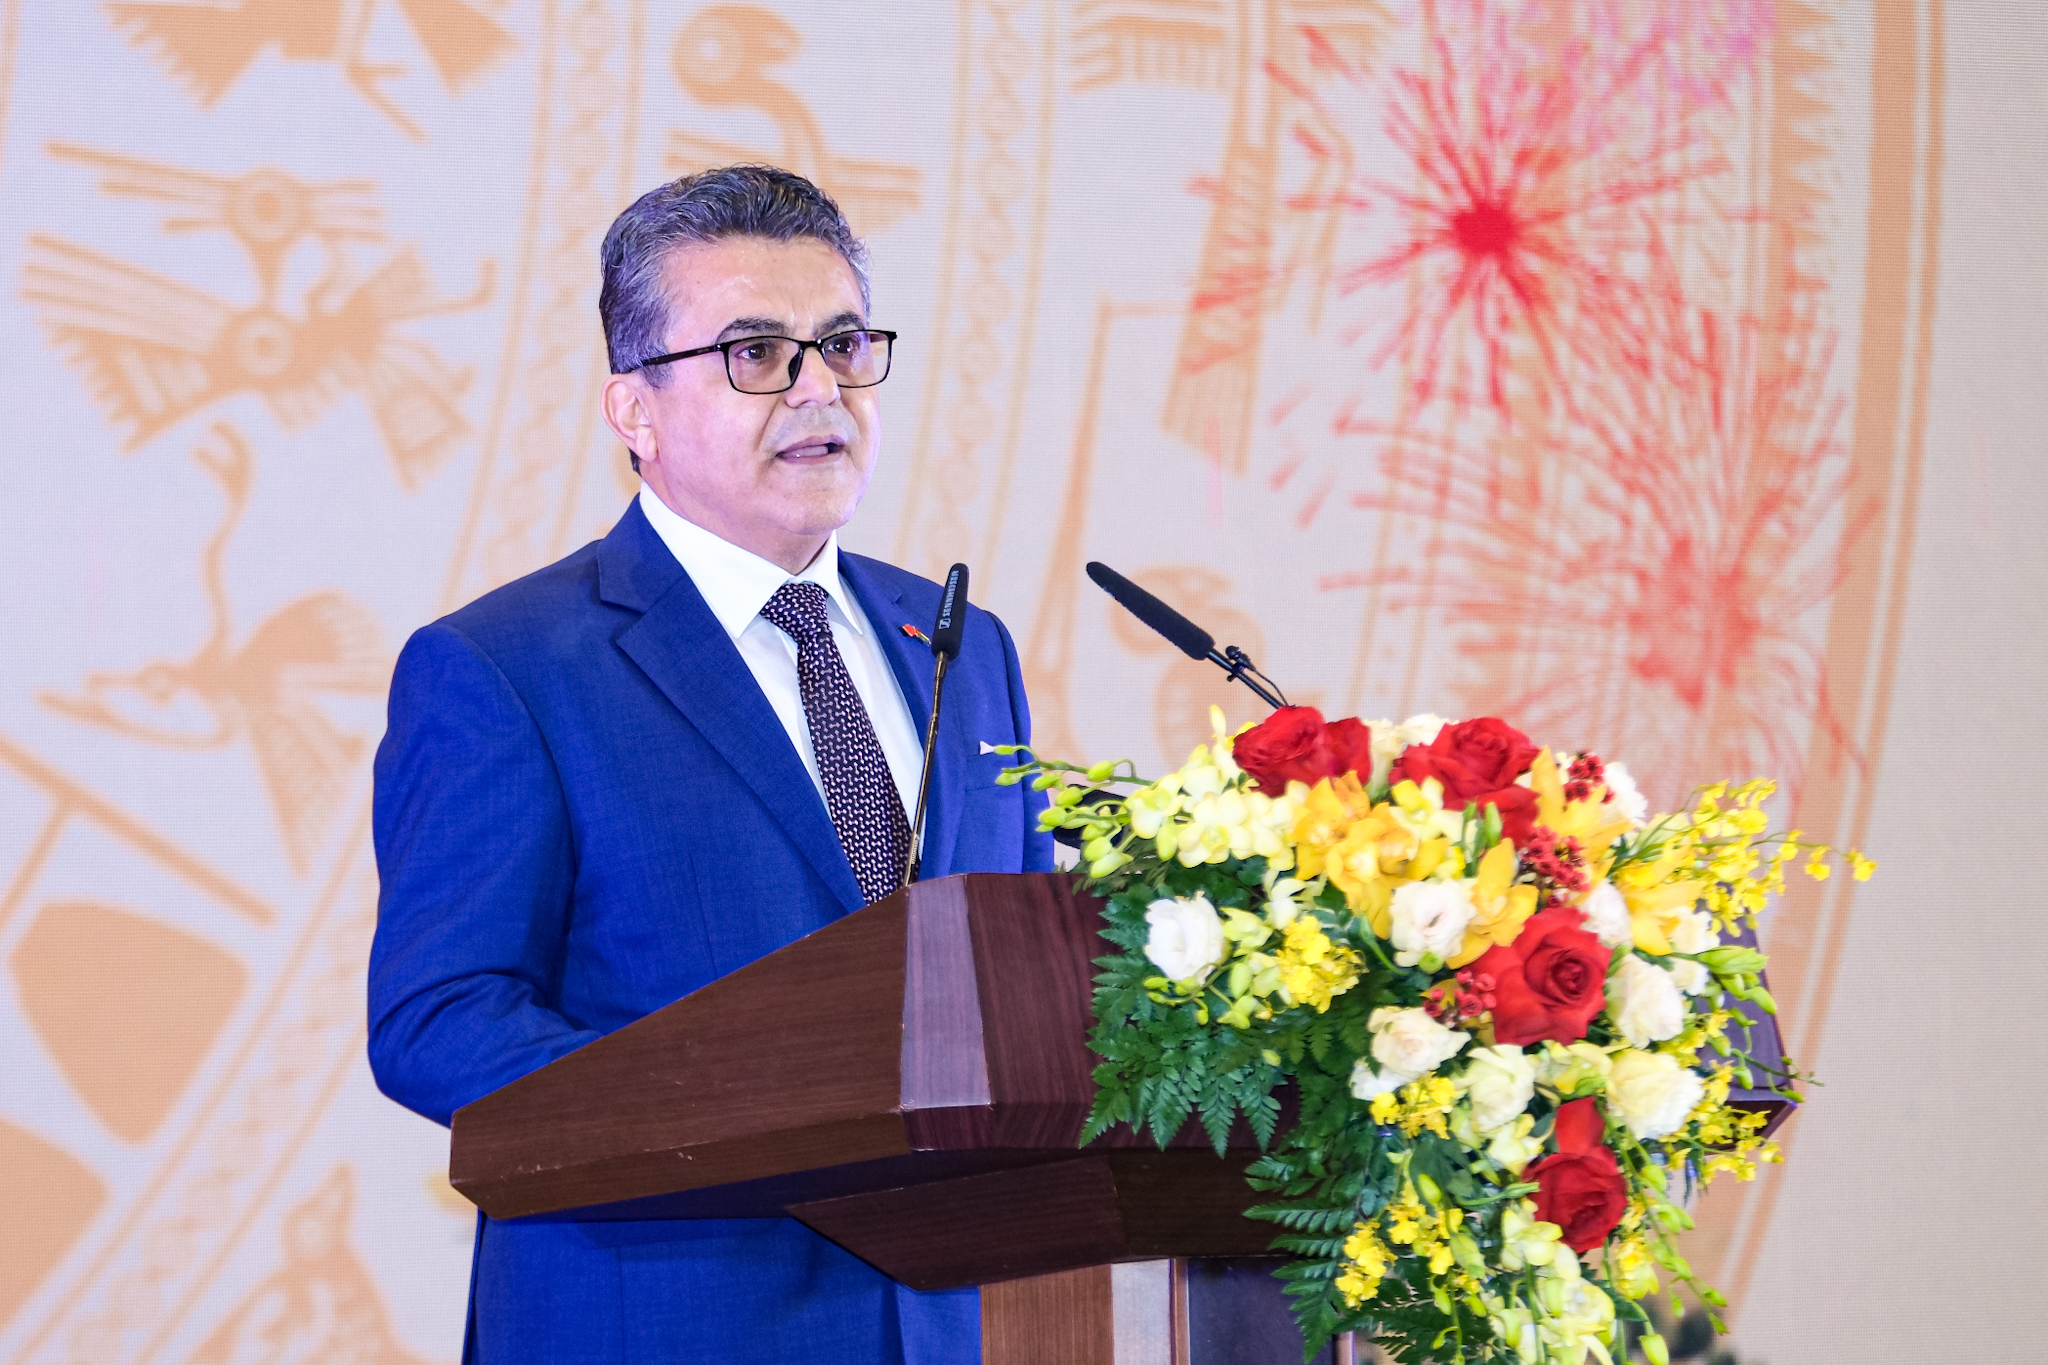 Palestinian Ambassador Saadi Salama, head of the diplomatic corps, speaks at the banquet in Hanoi, January 9, 2022. Photo: Nam Tran / Tuoi Tre